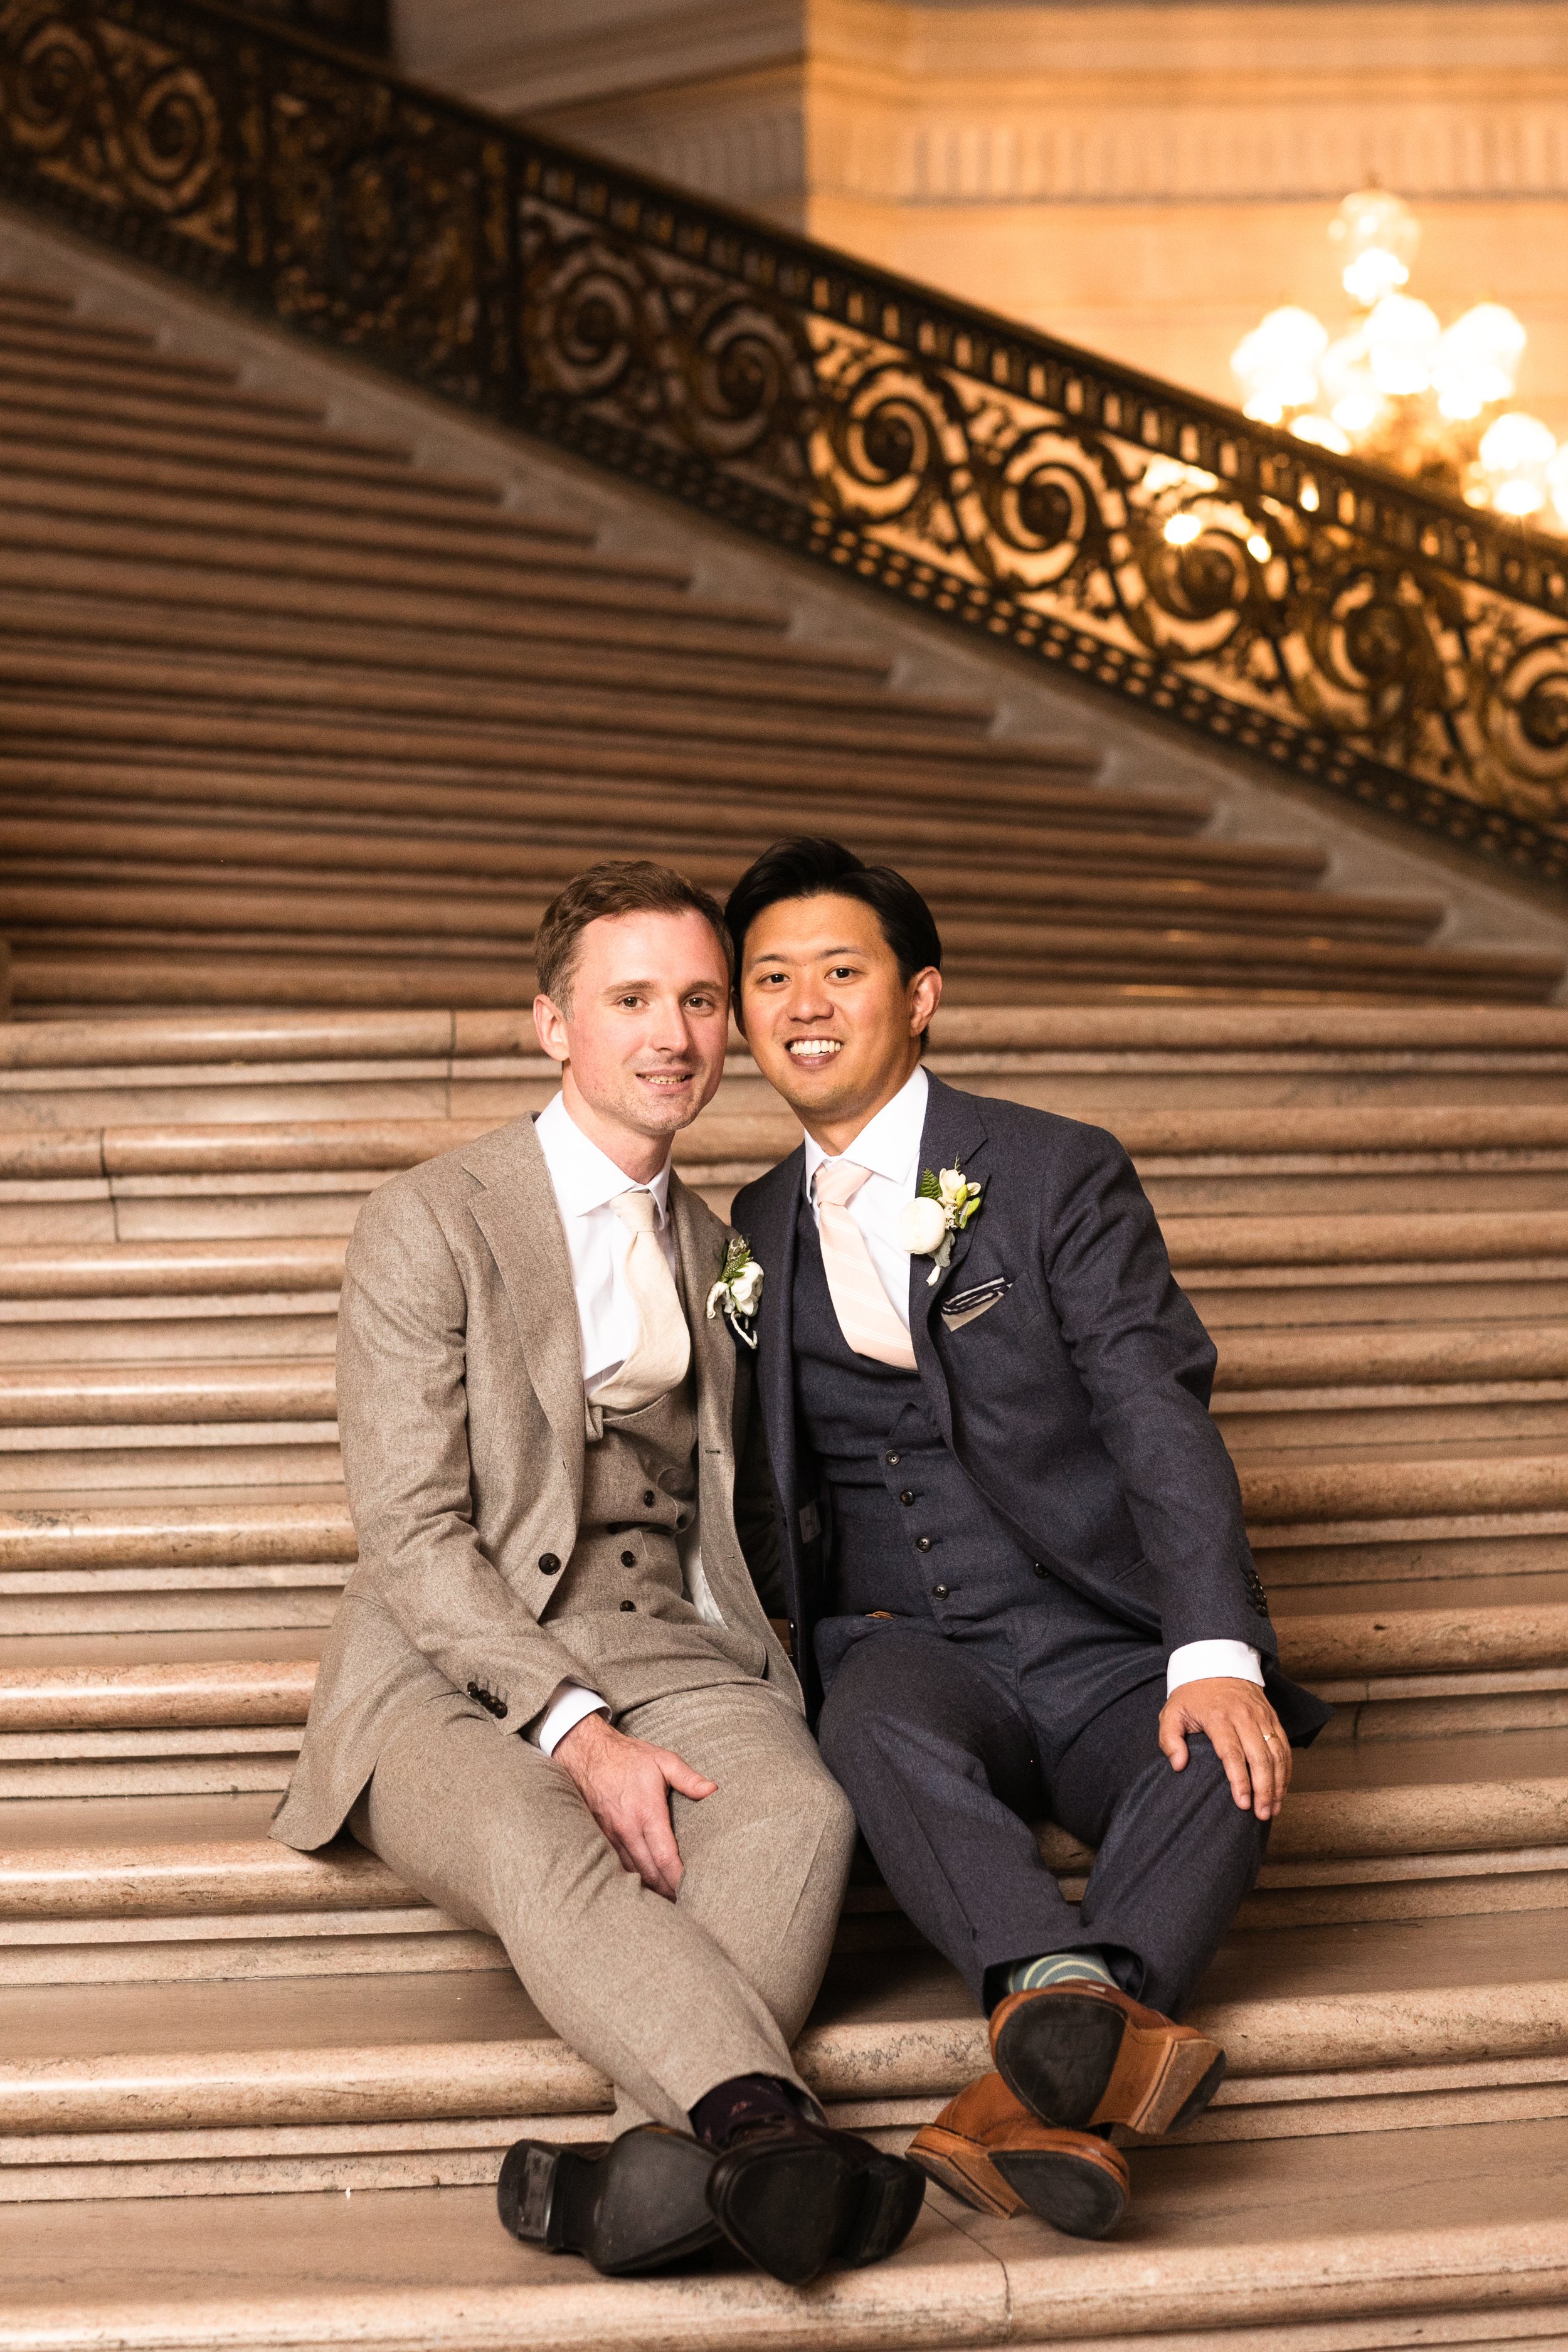 samesex marriage city hall grand stairwell